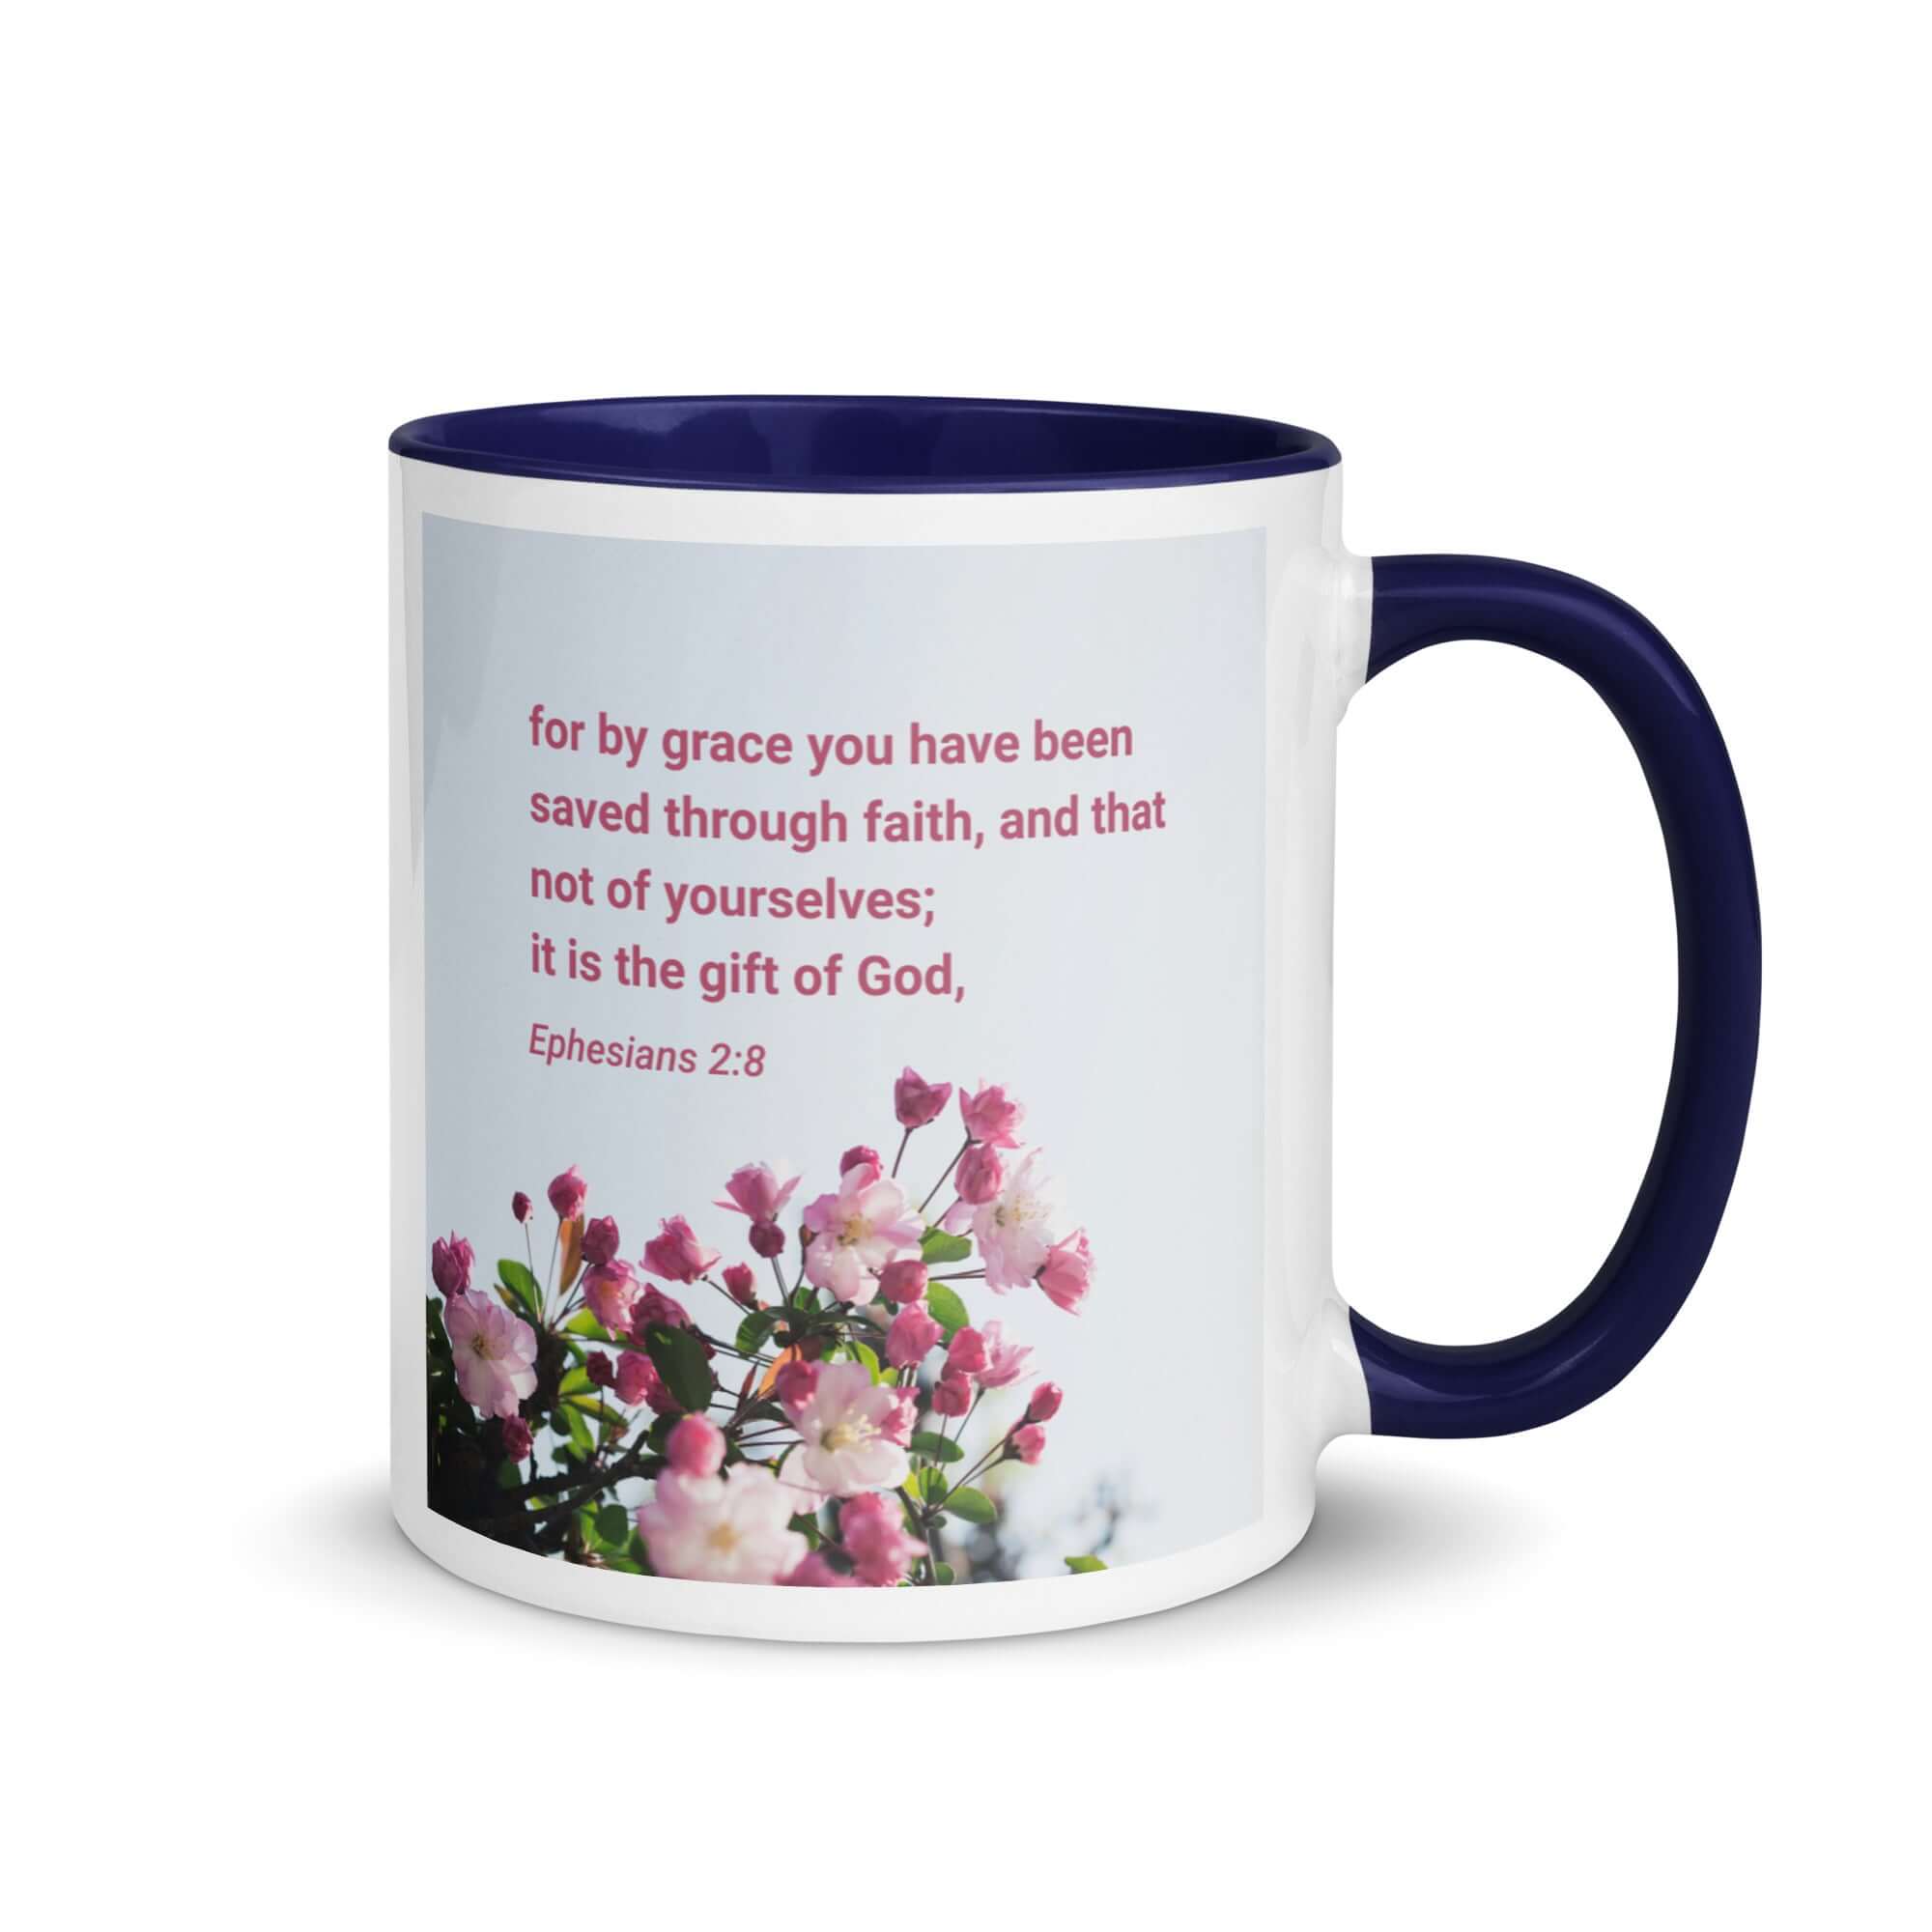 Eph 2:8 - Bible Verse, saved through faith White Ceramic Mug with Color Inside